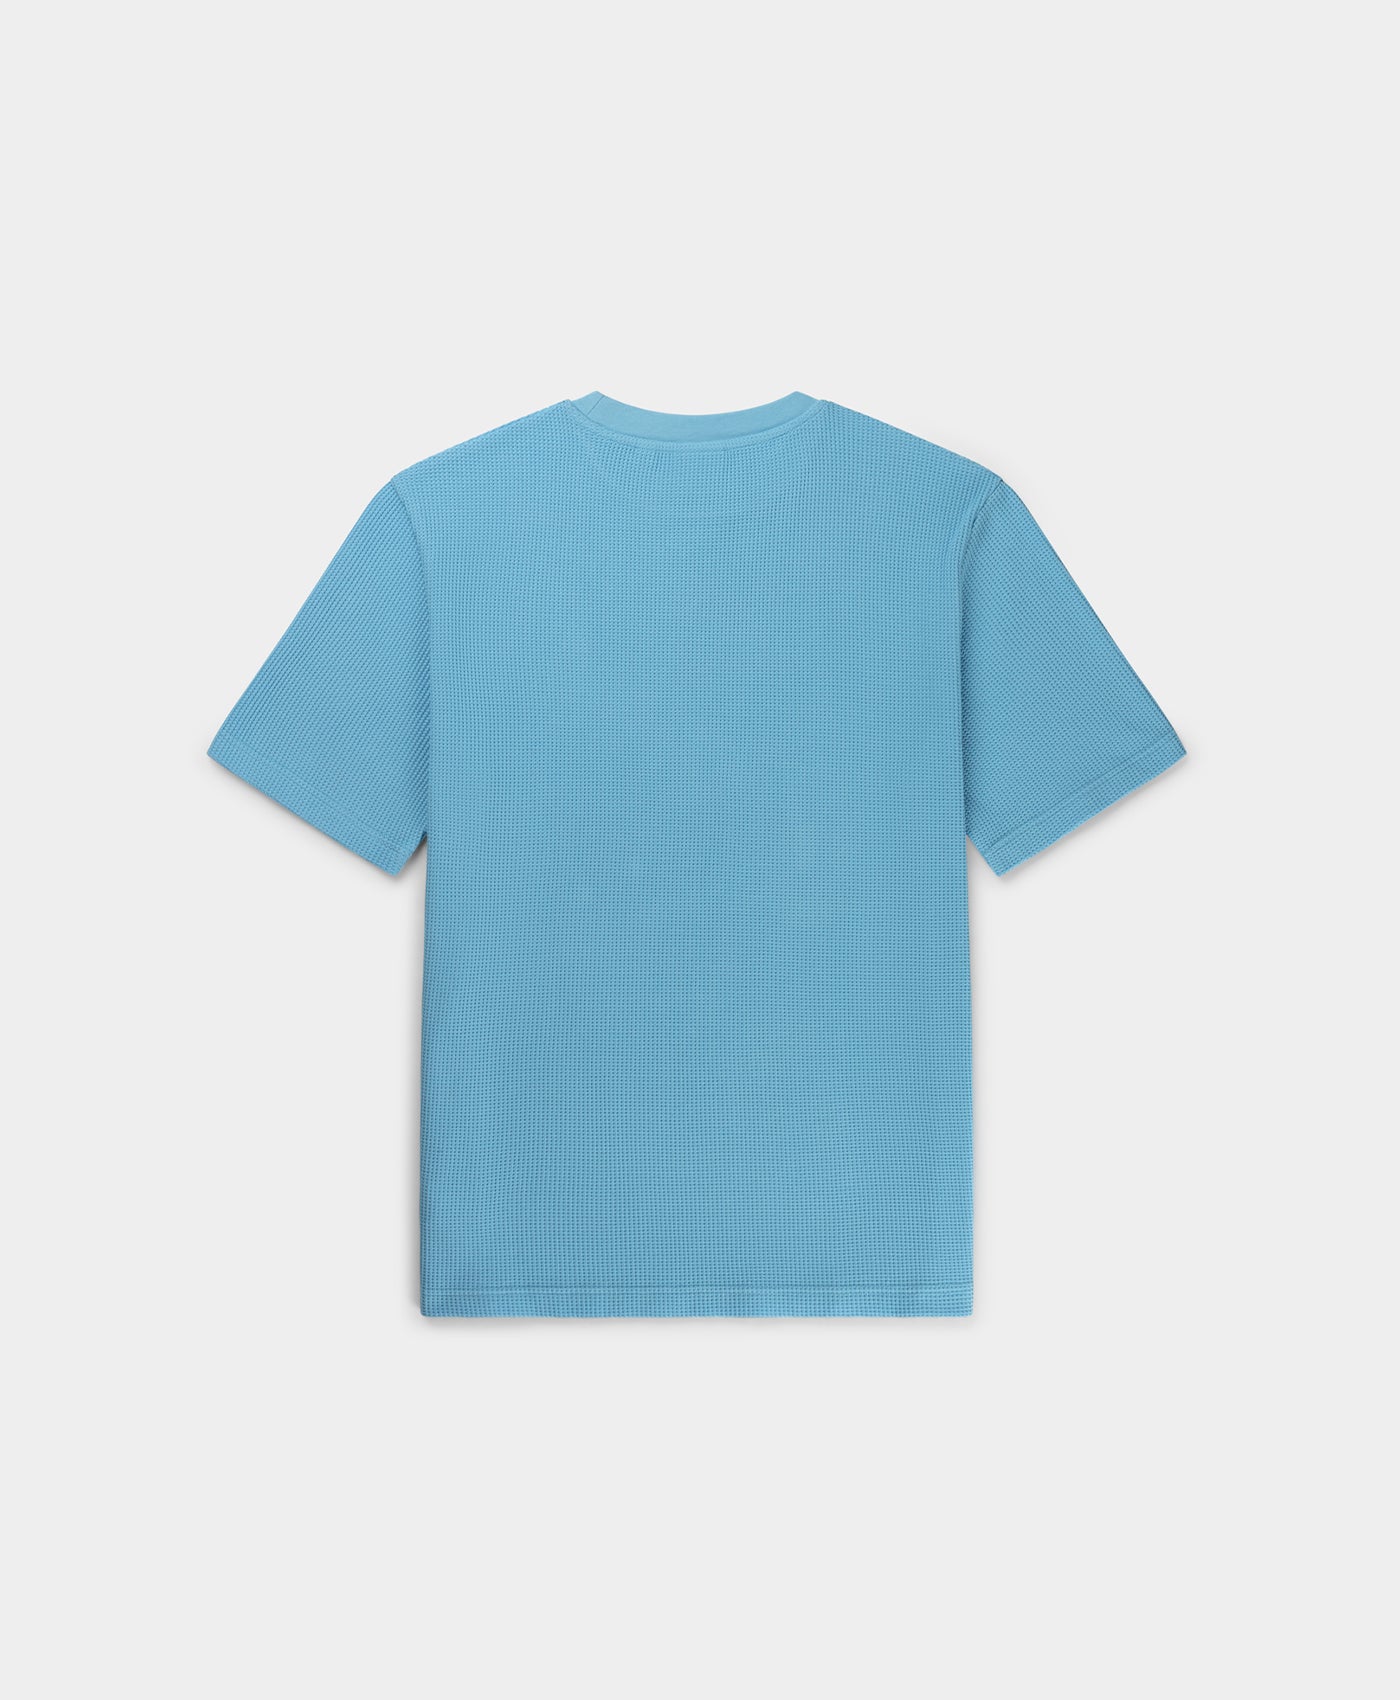 DP - Baby Blue Renzy T-Shirt - Packshot - Rear